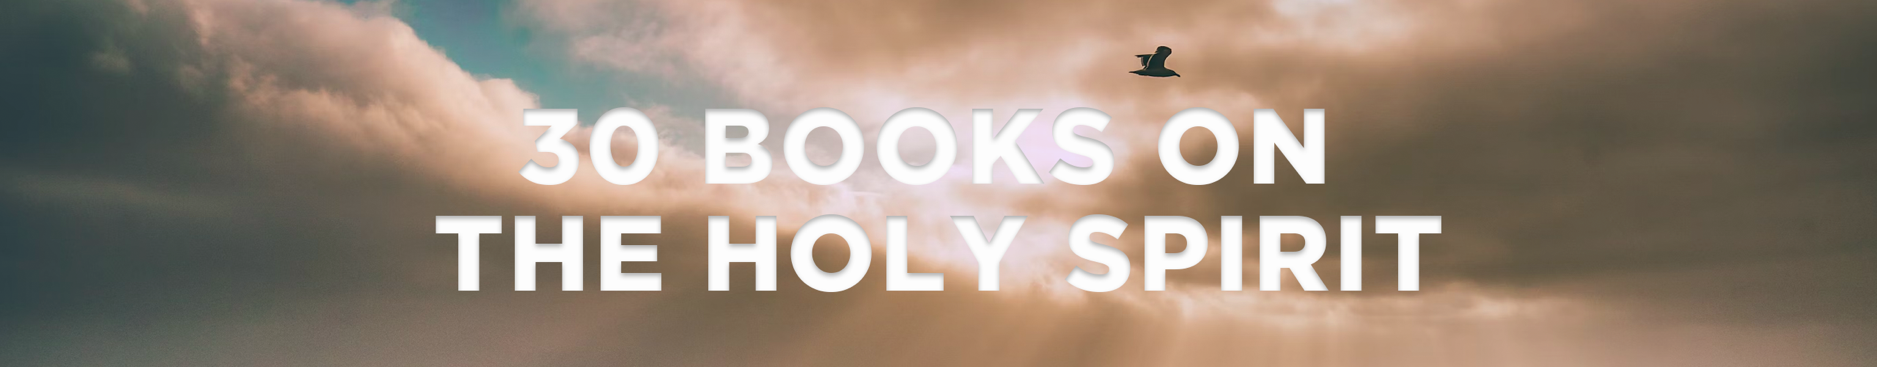 holy spirit books